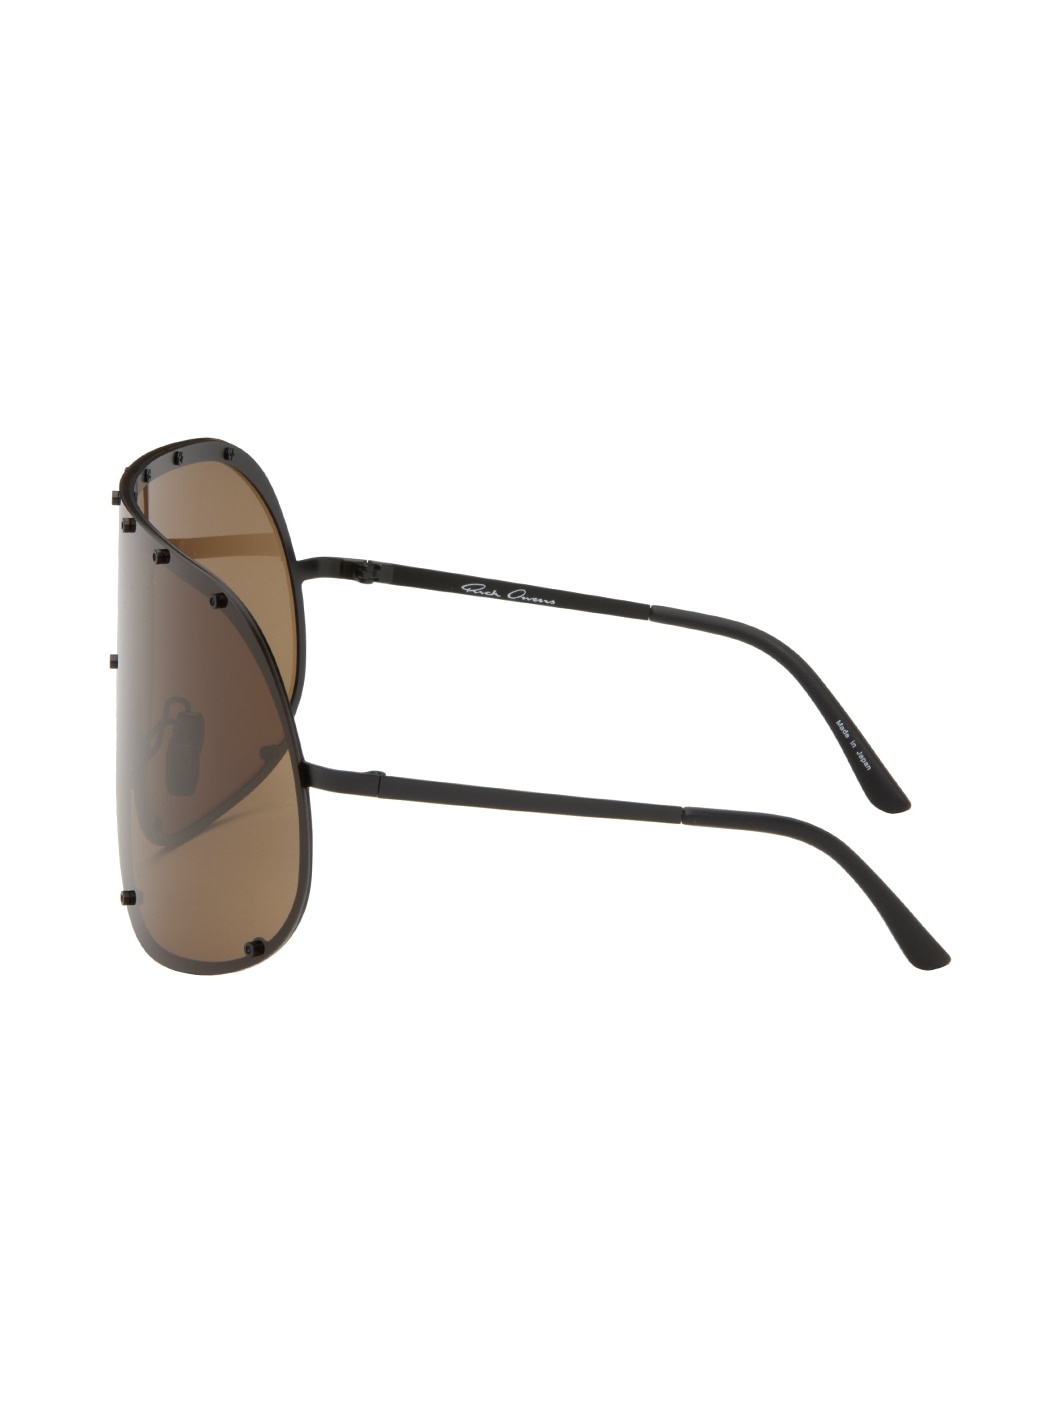 Black & Brown Shield Sunglasses - 3